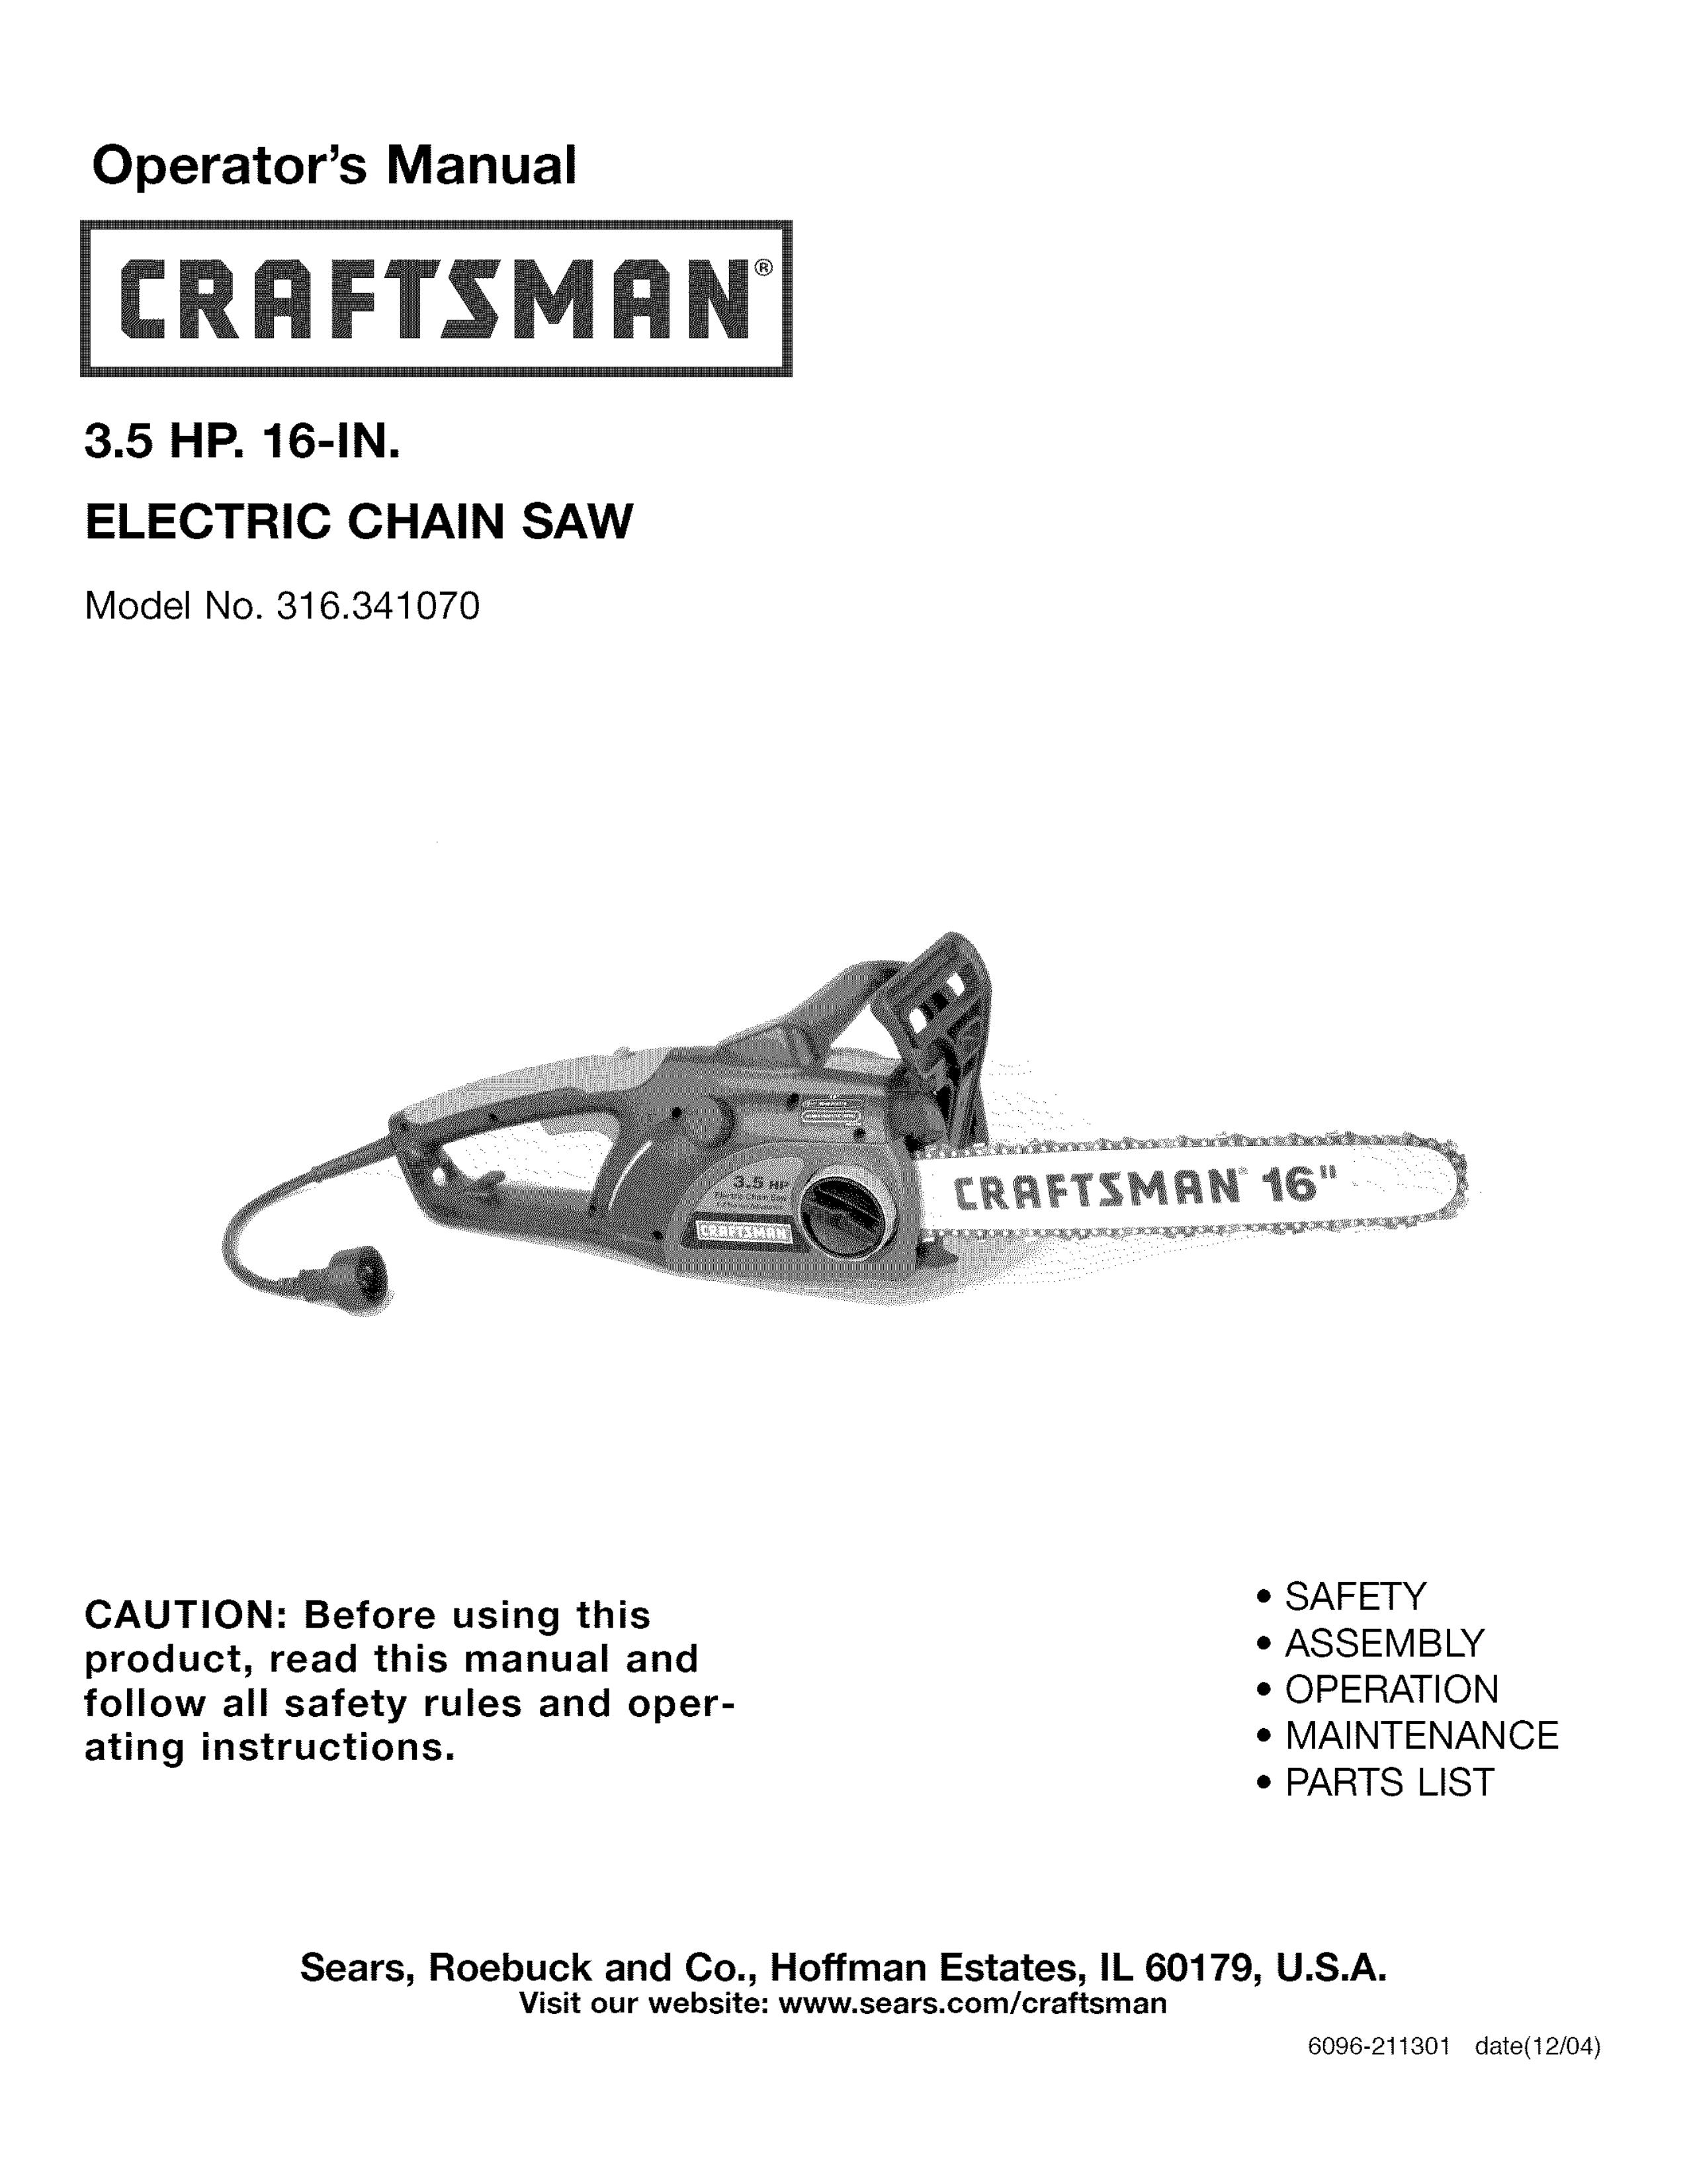 Craftsman 316.34107 Chainsaw User Manual